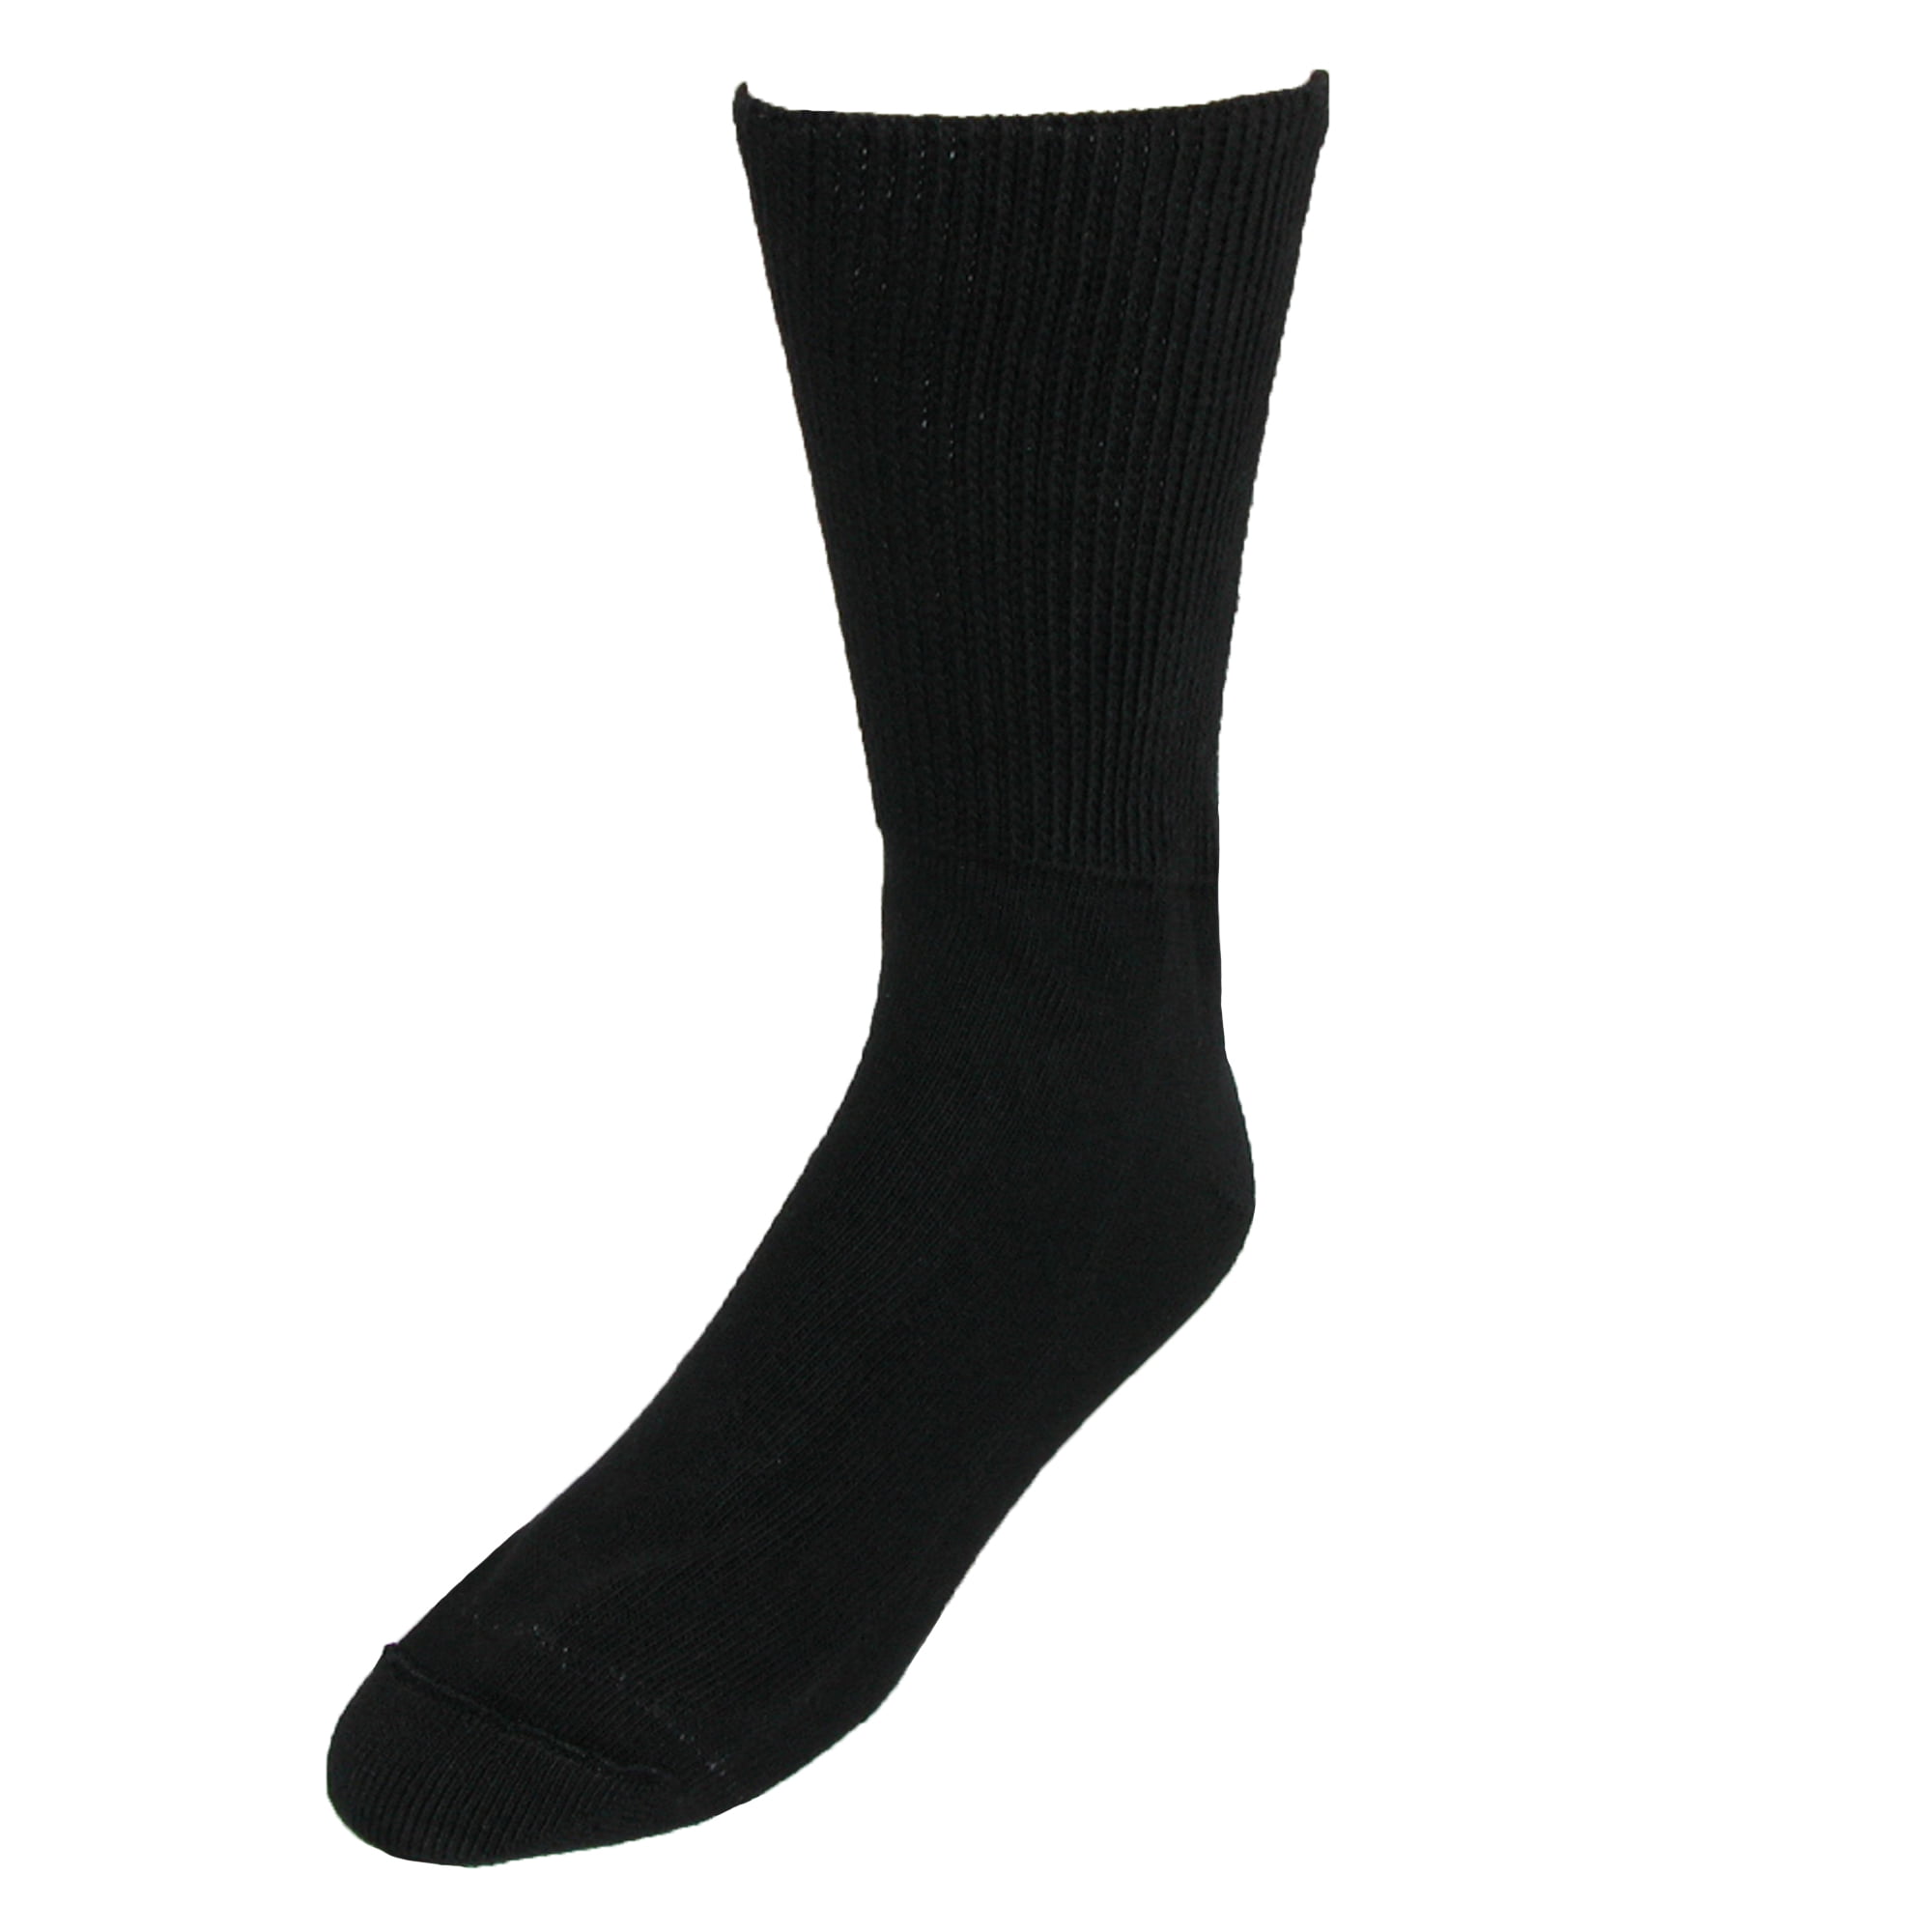 Extra-Wide Medical (Diabetic) Socks for Women (White), size 6-11 ...